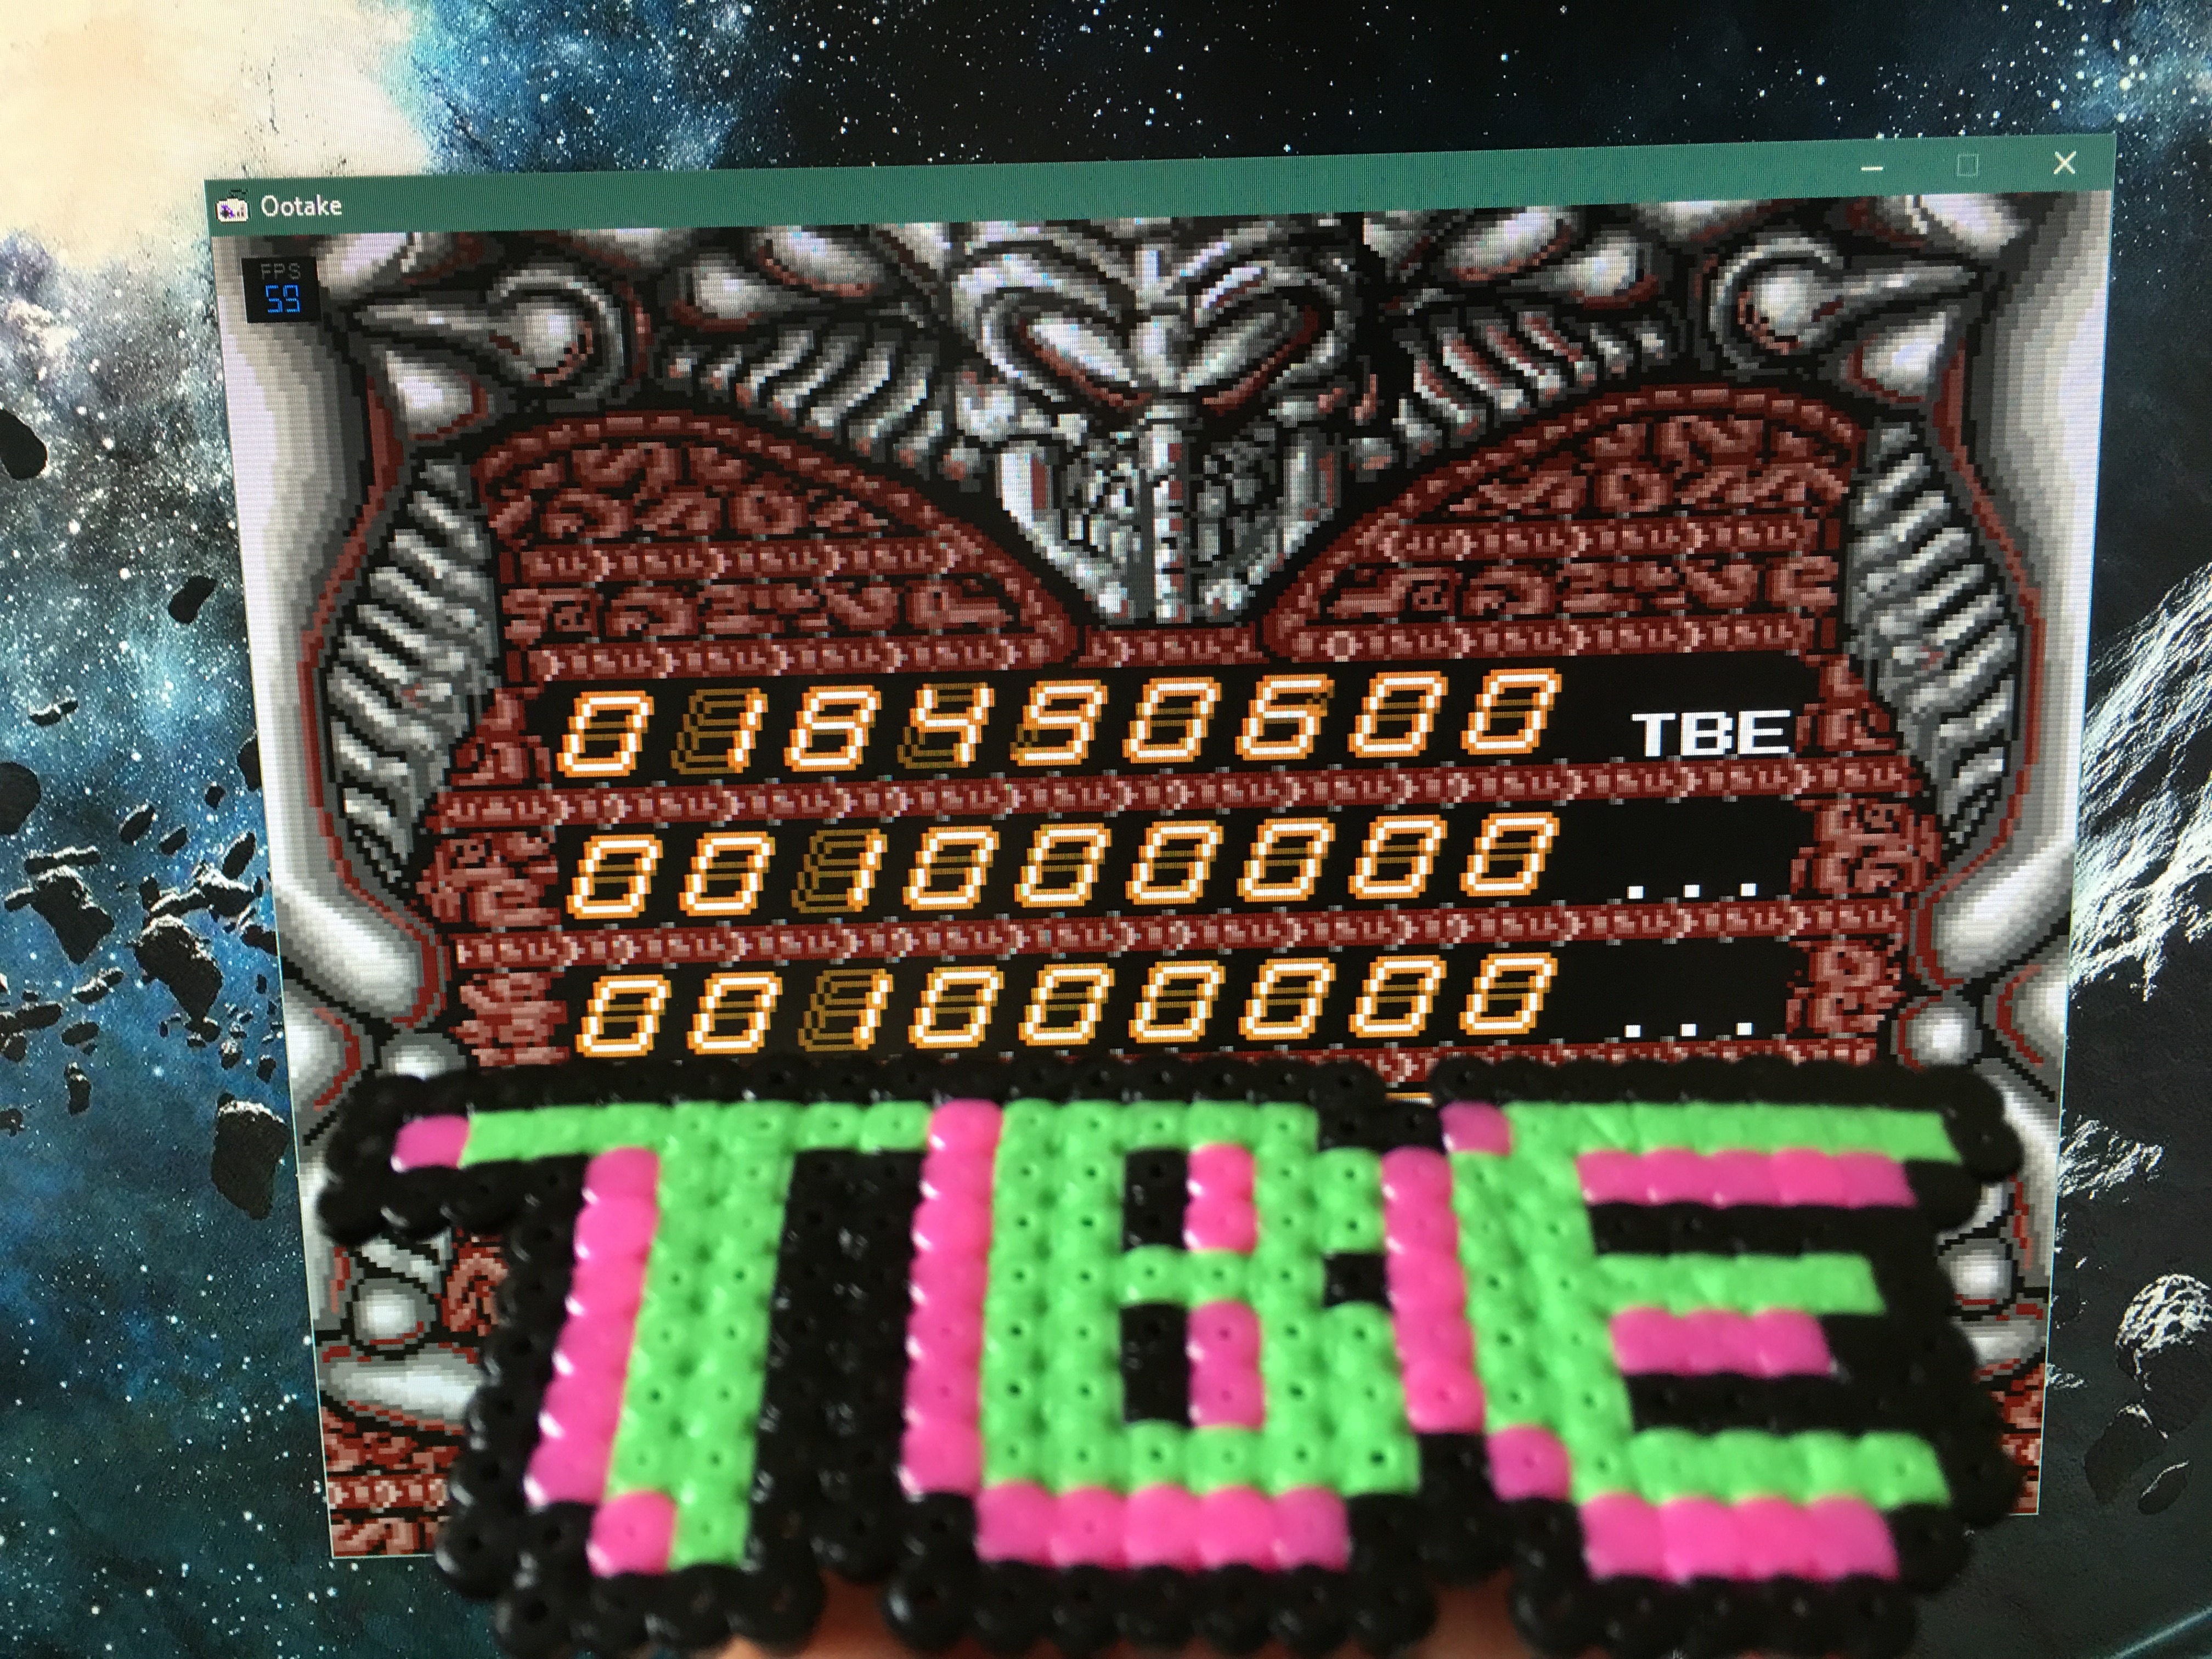 Sixx: Alien Crush (TurboGrafx-16/PC Engine Emulated) 18,490,600 points on 2016-06-26 10:55:03